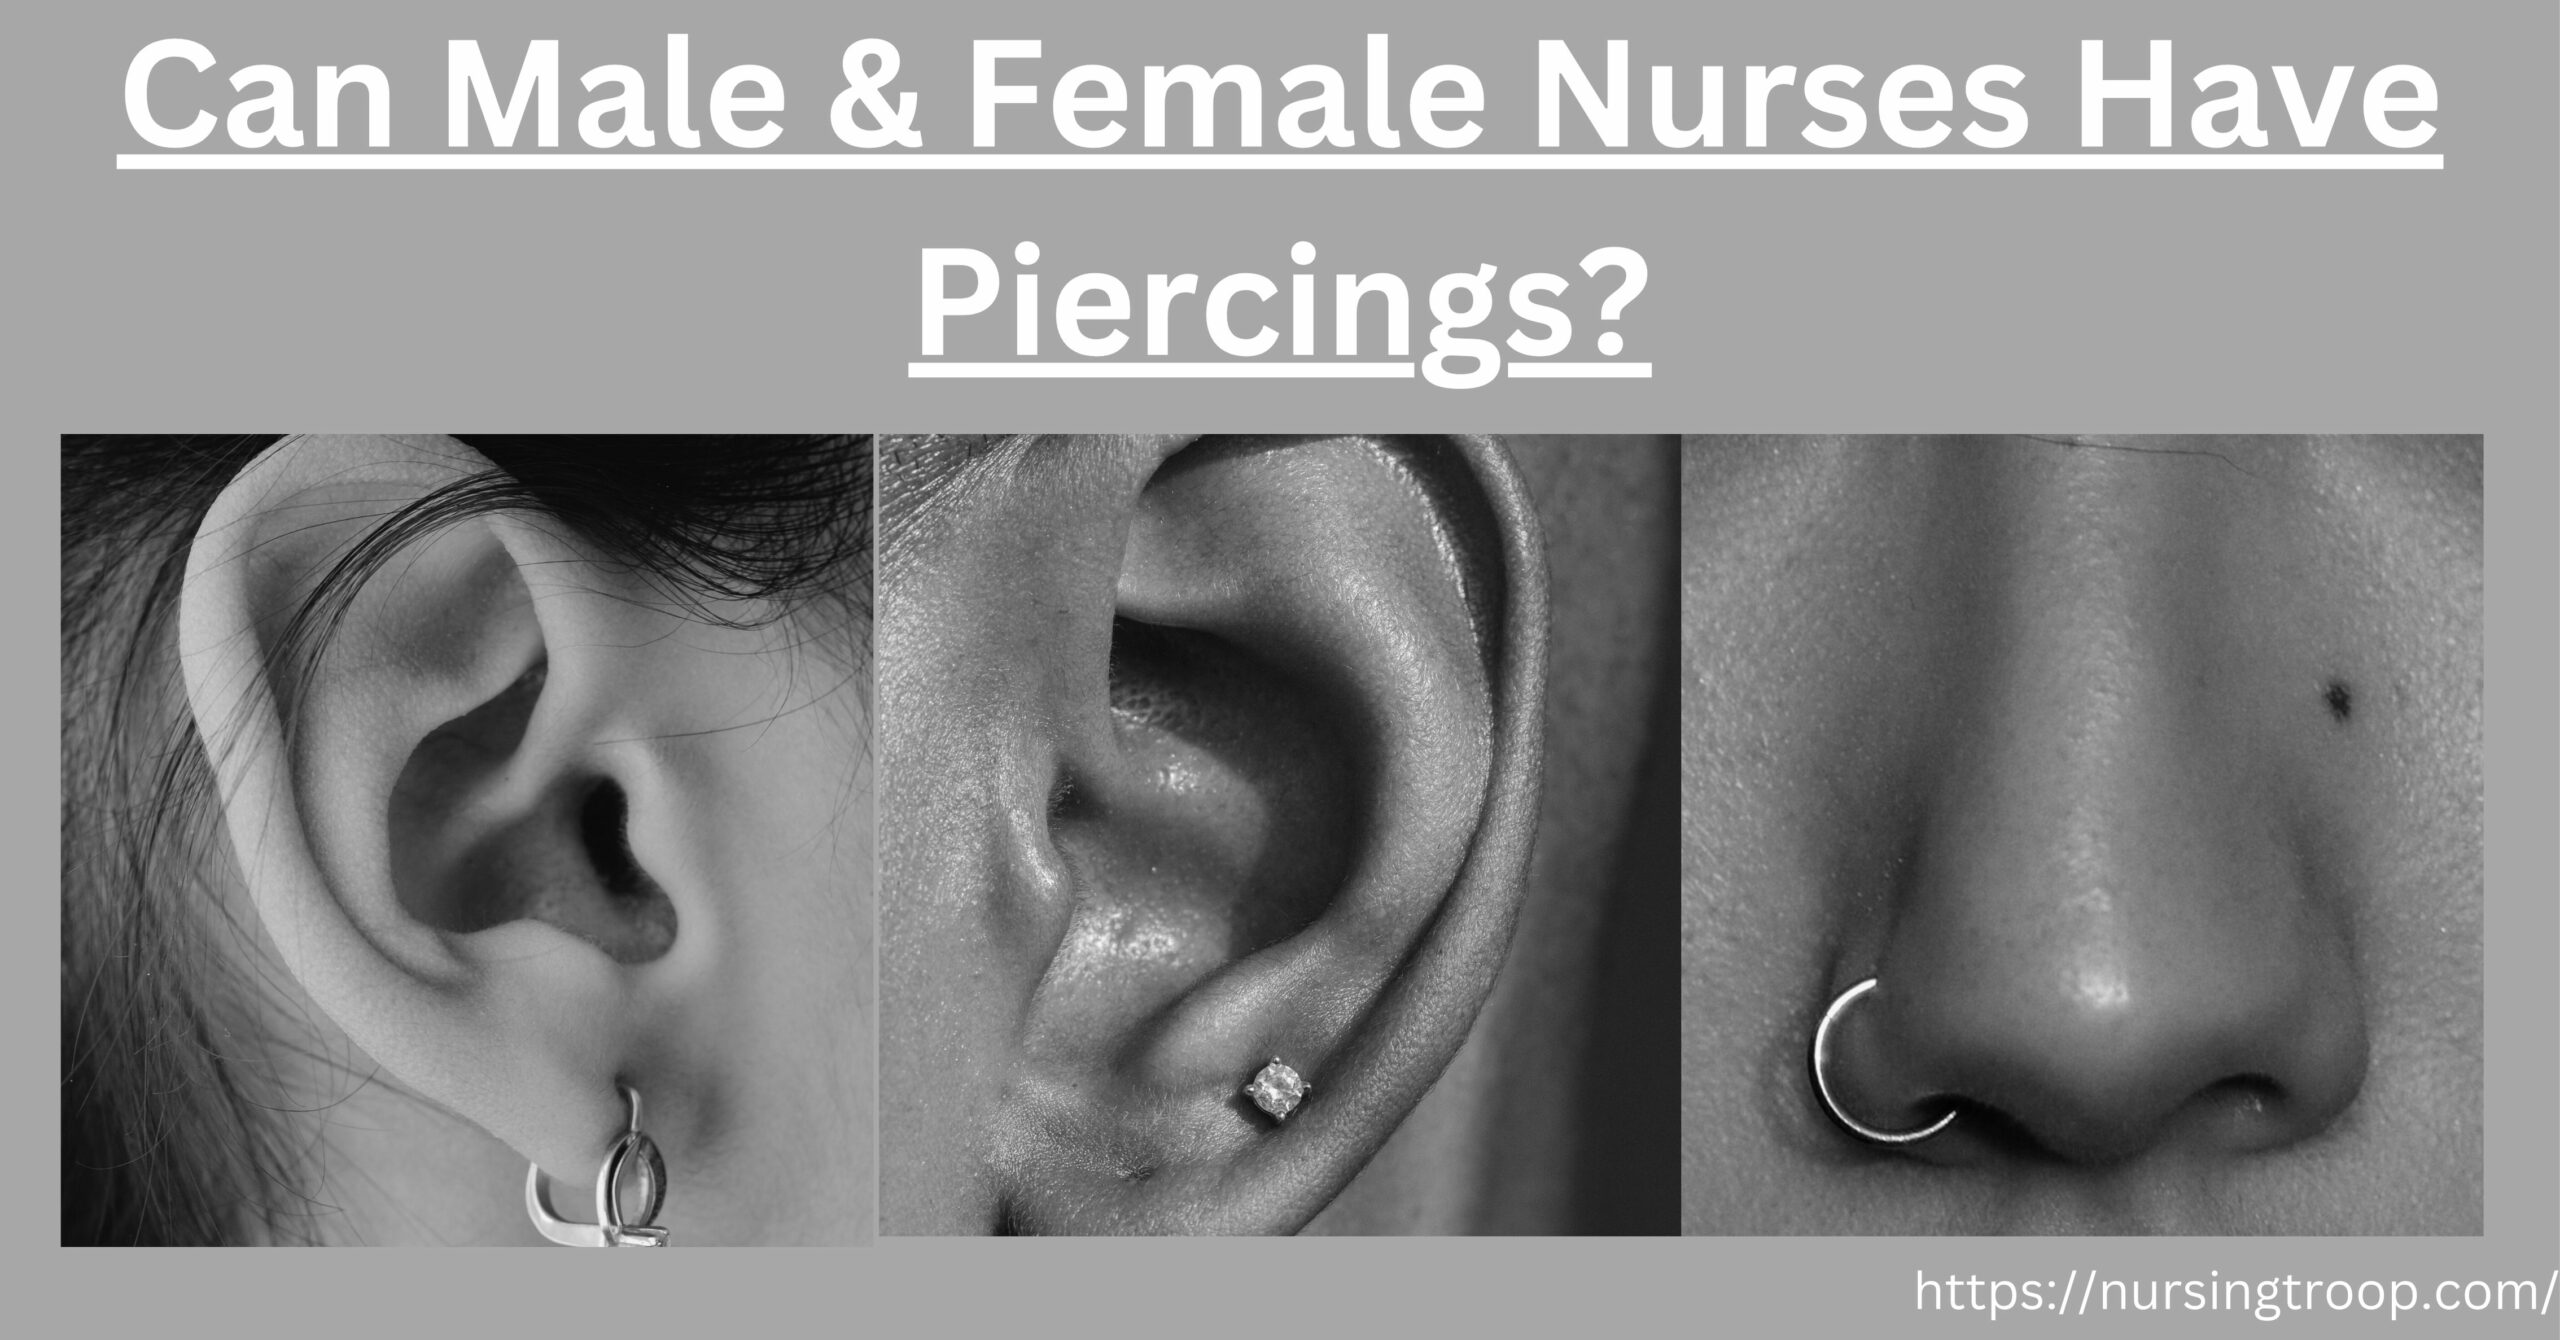 Can Male & Female Nurses Have Piercings